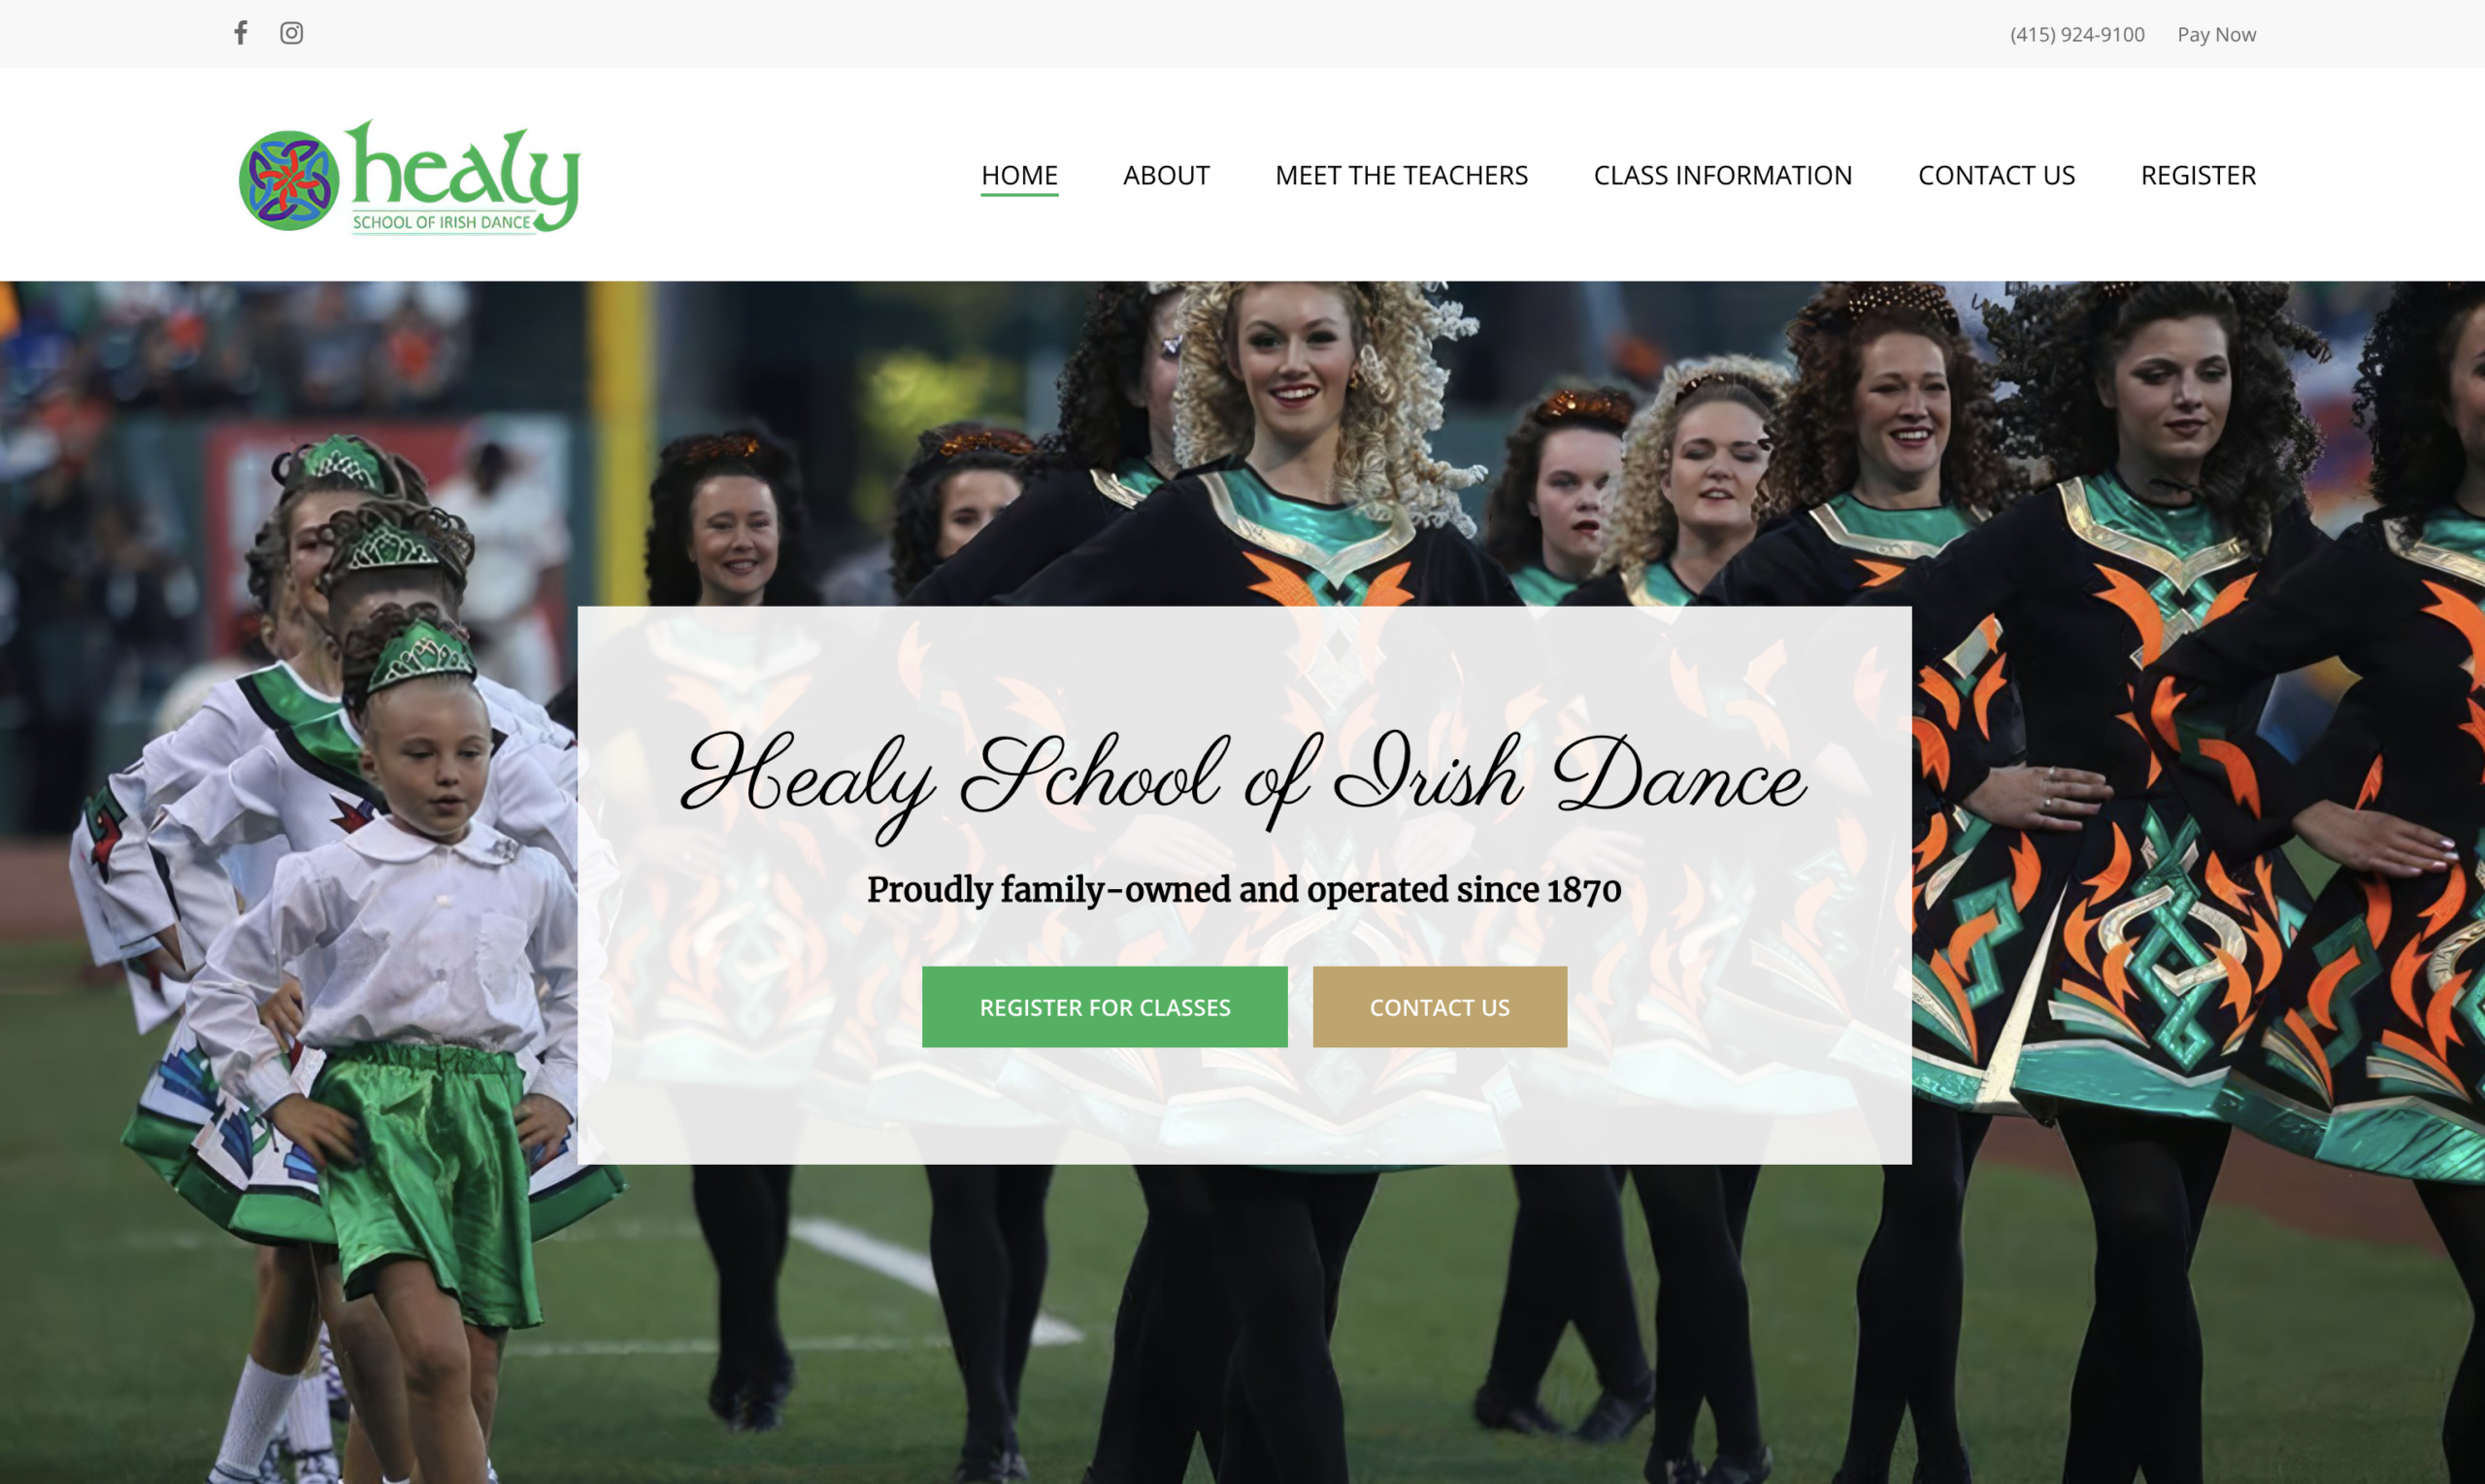 healy school of irish dance